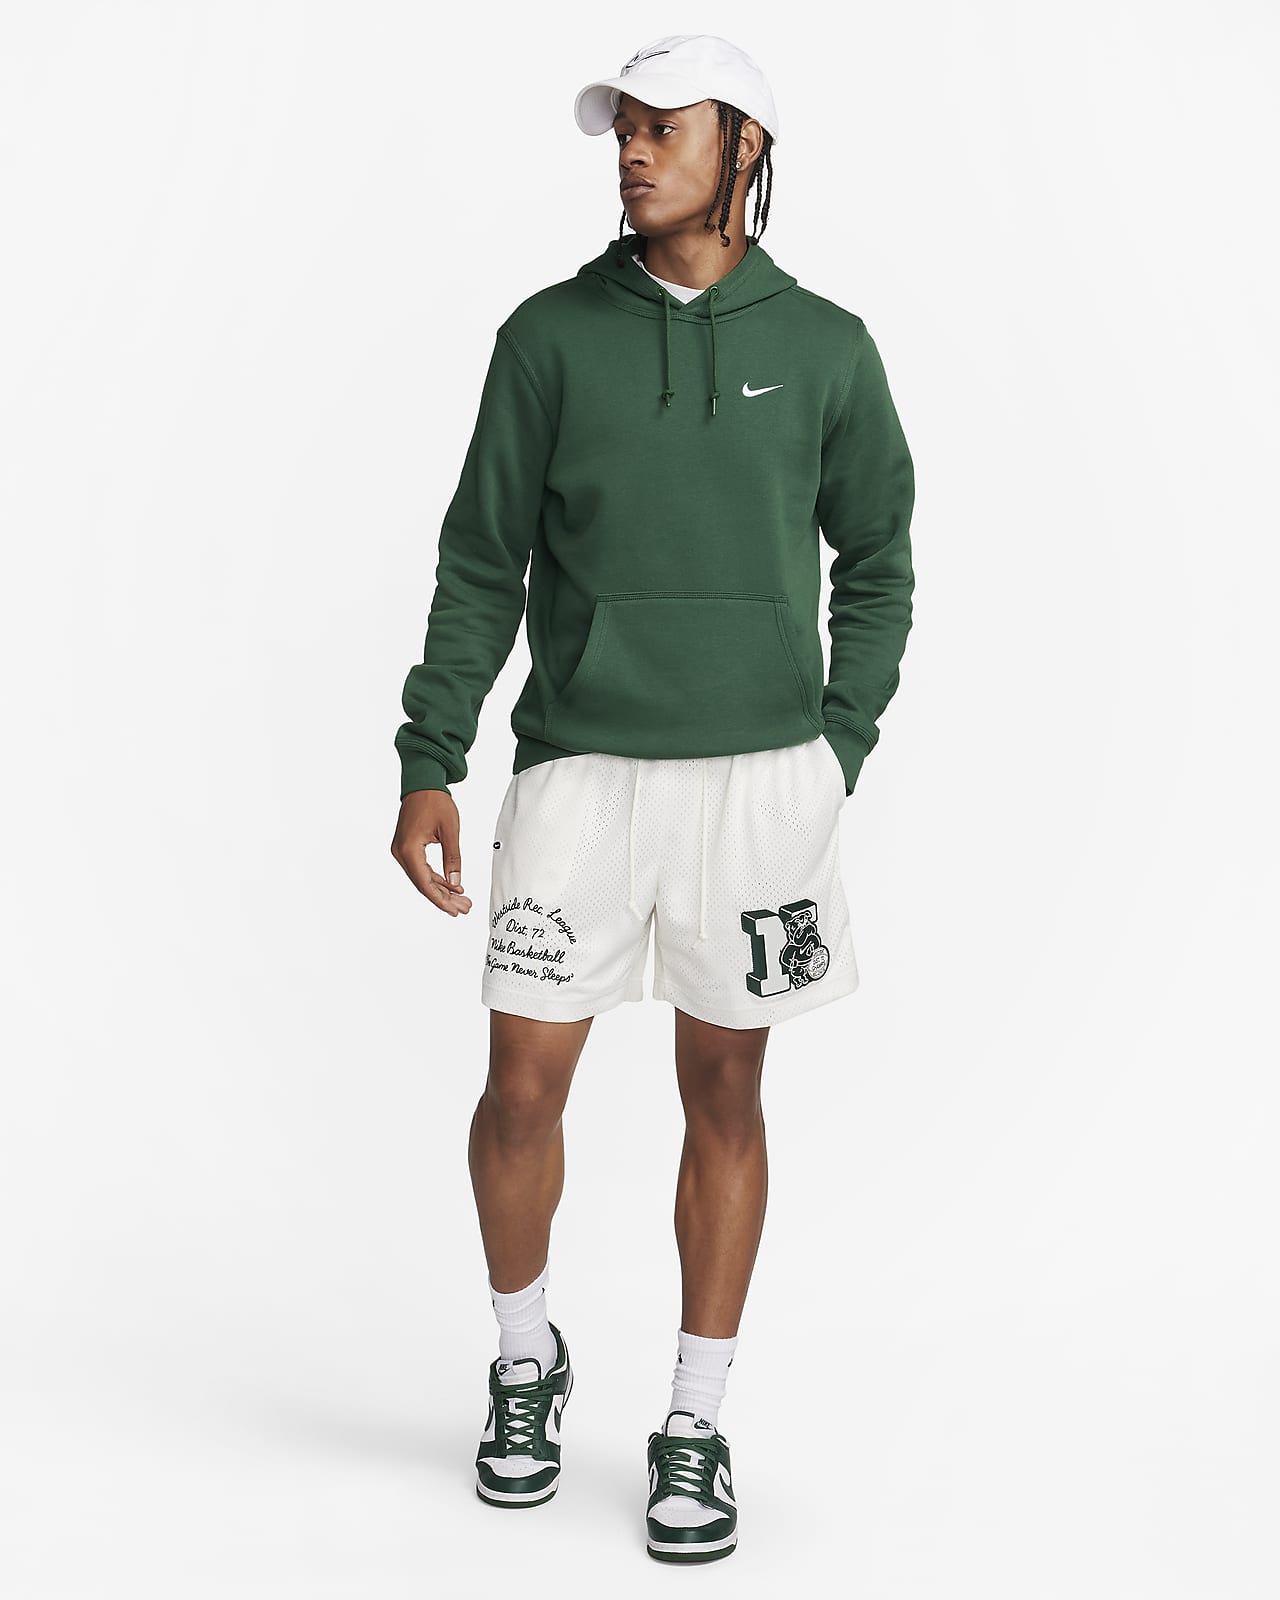 Mesh Nike Men\'s Shorts. Authentics